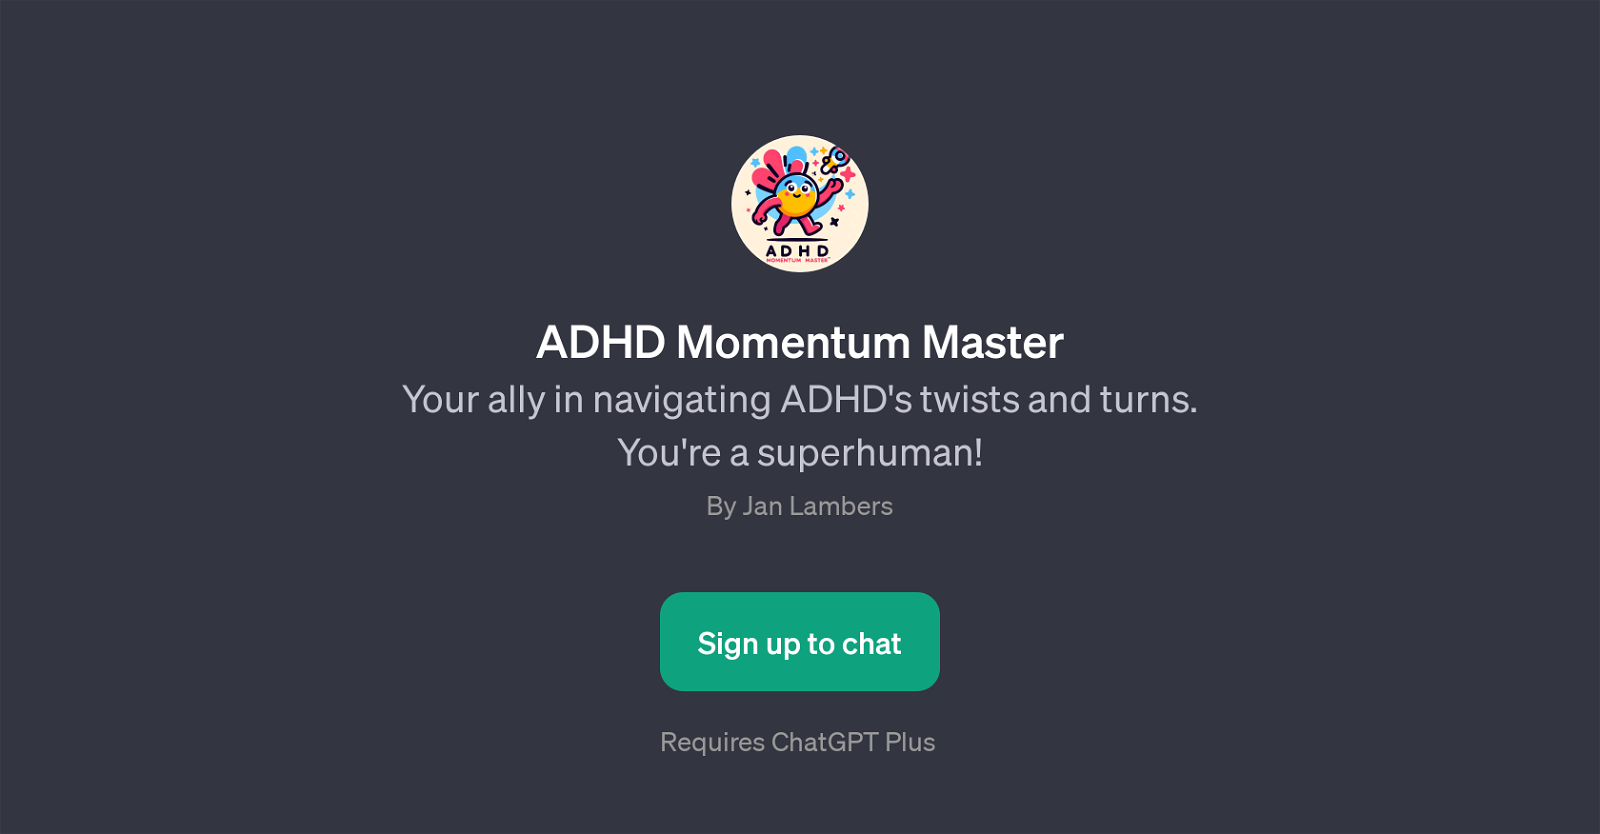 ADHD Momentum Master website